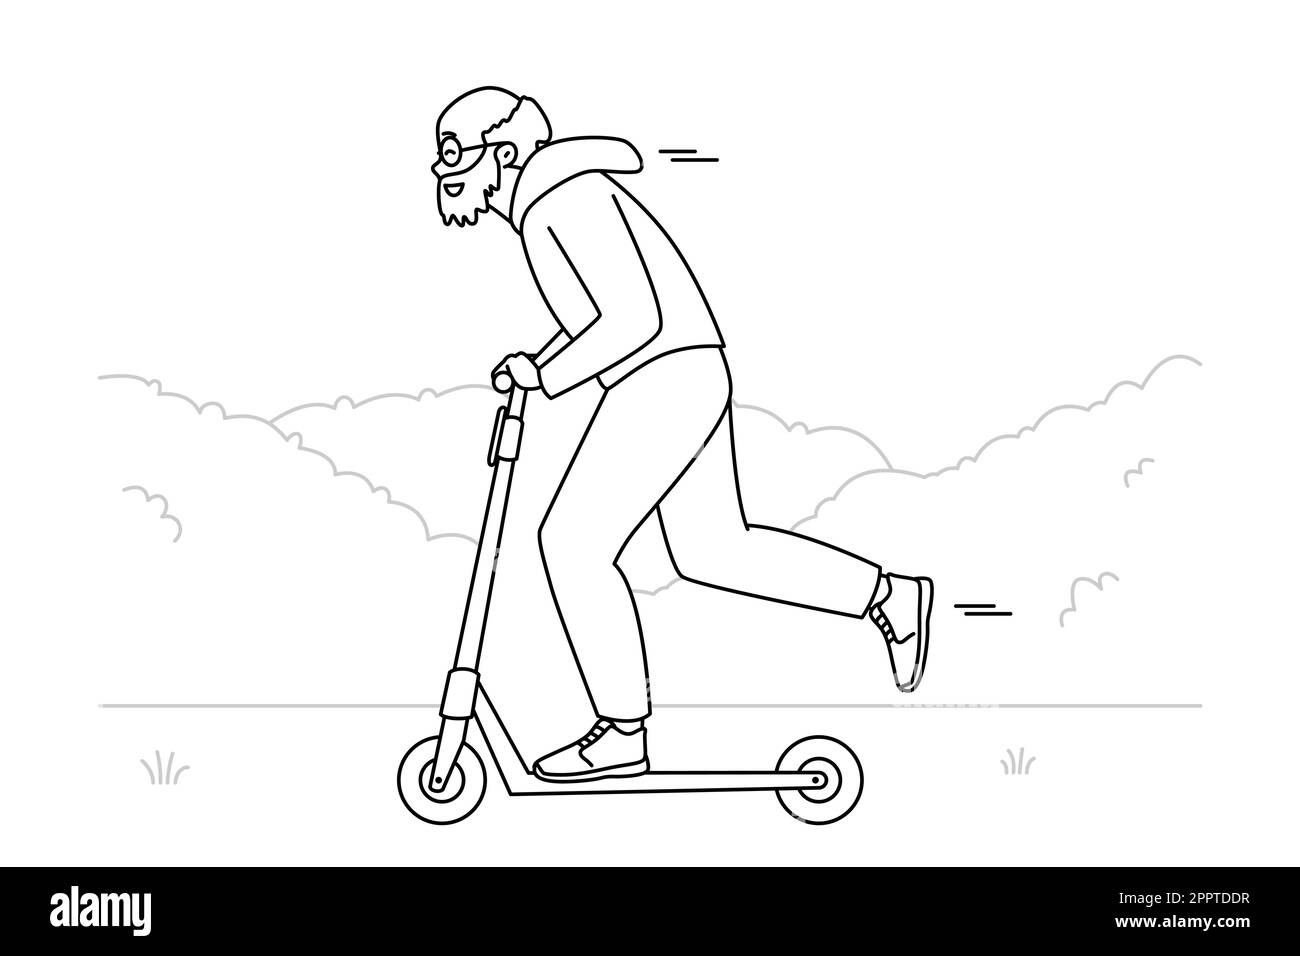 Energetic elderly man riding scooter Stock Vector